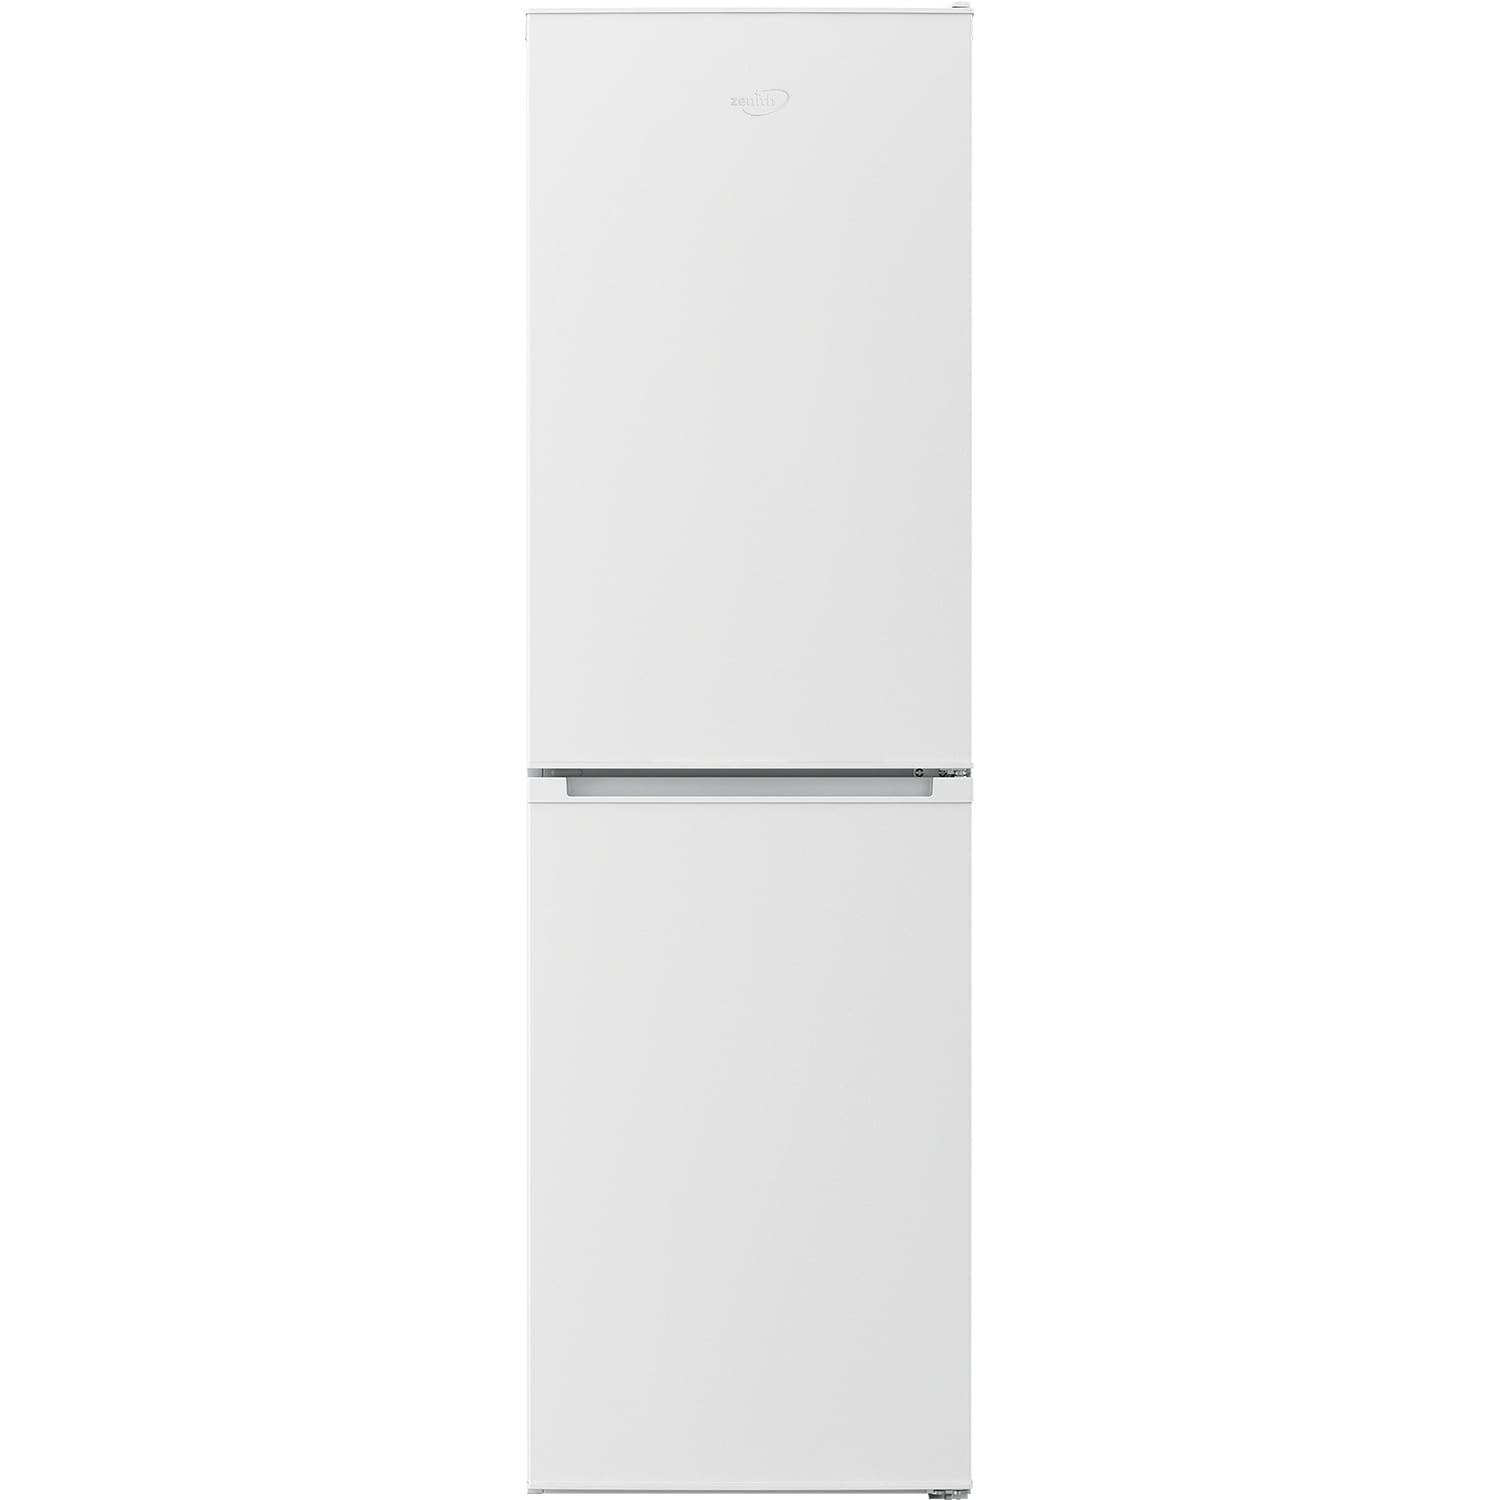 Zenith ZCS3582W 54cm 50/50 Manual Fridge Freezer - White